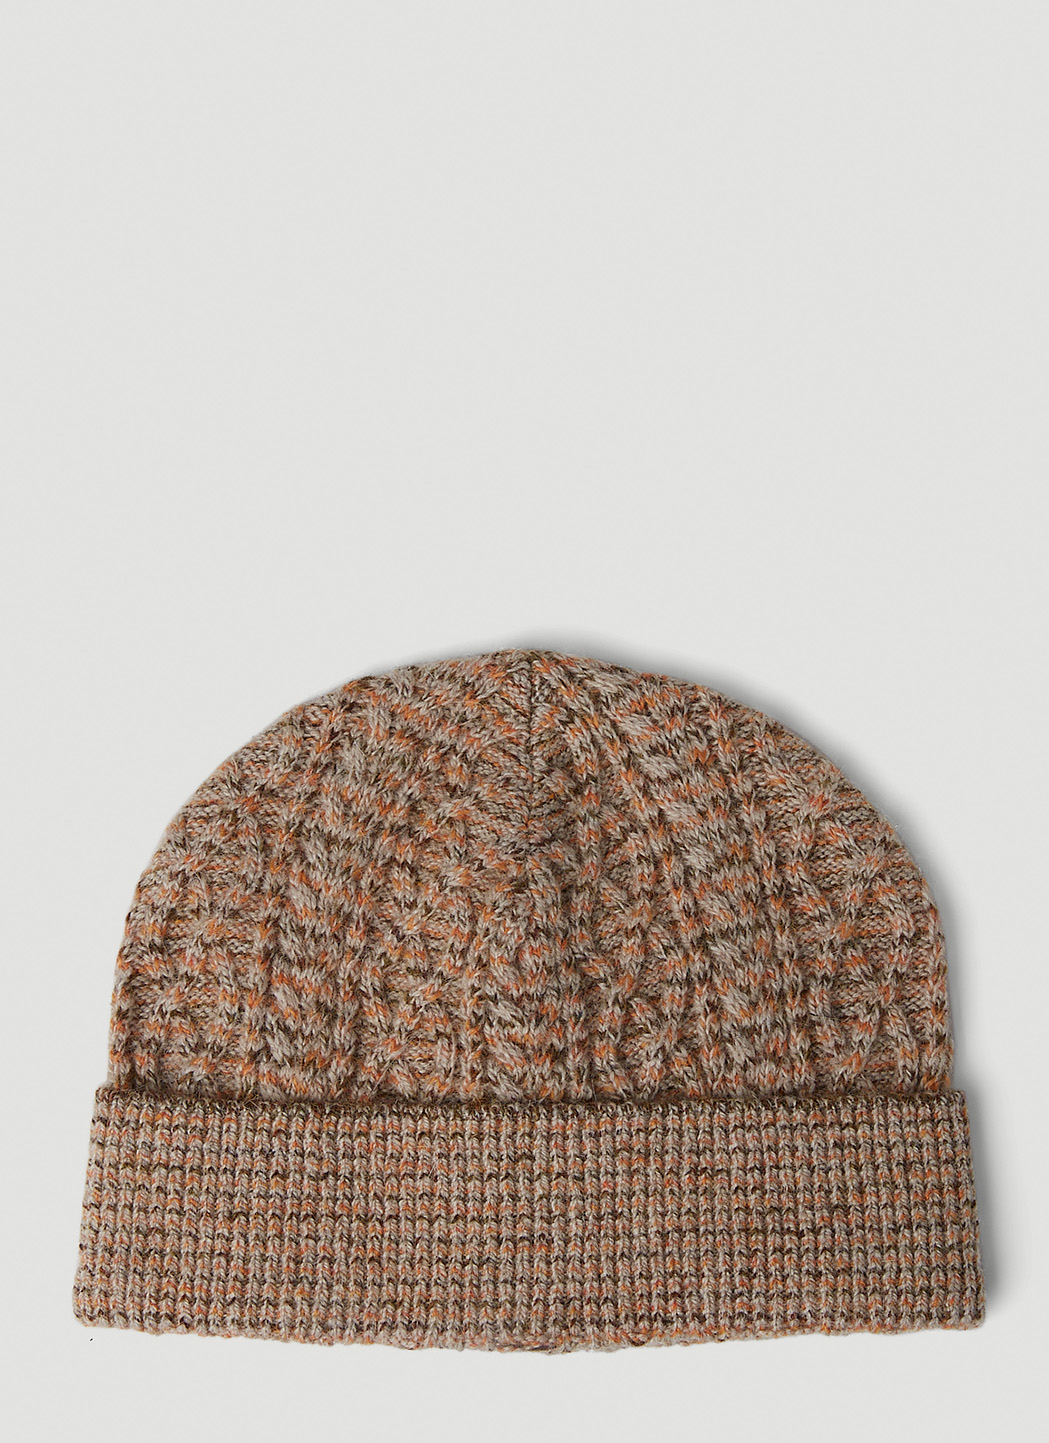 Mixed Knit Beanie Hat